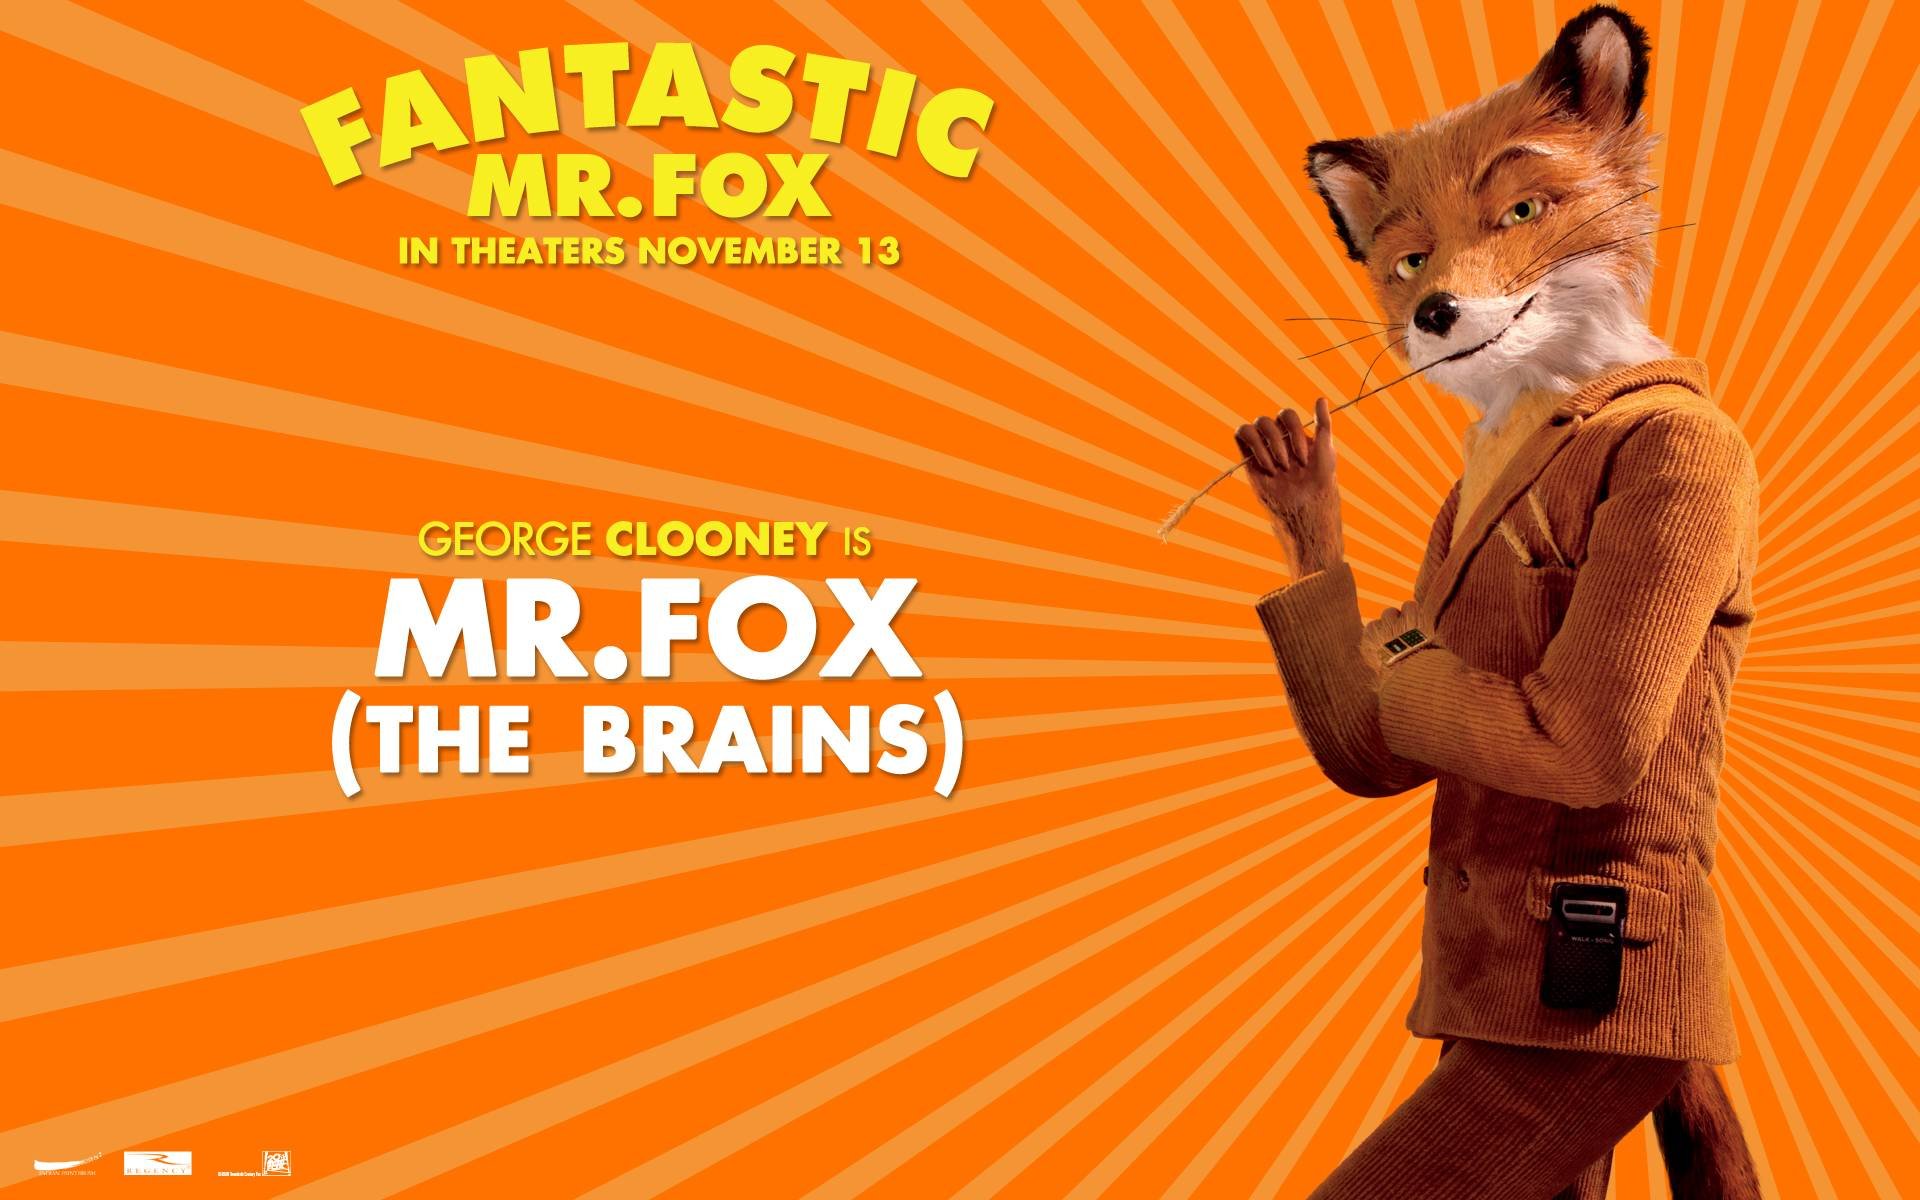 Mister fox. Бесподобный Мистер Фокс. Бесподобный Мистер Фокс 2009. Бесподобный Мистер Фокс / fantastic Mr. Fox. Уэс Андерсон бесподобный Мистер Фокс.